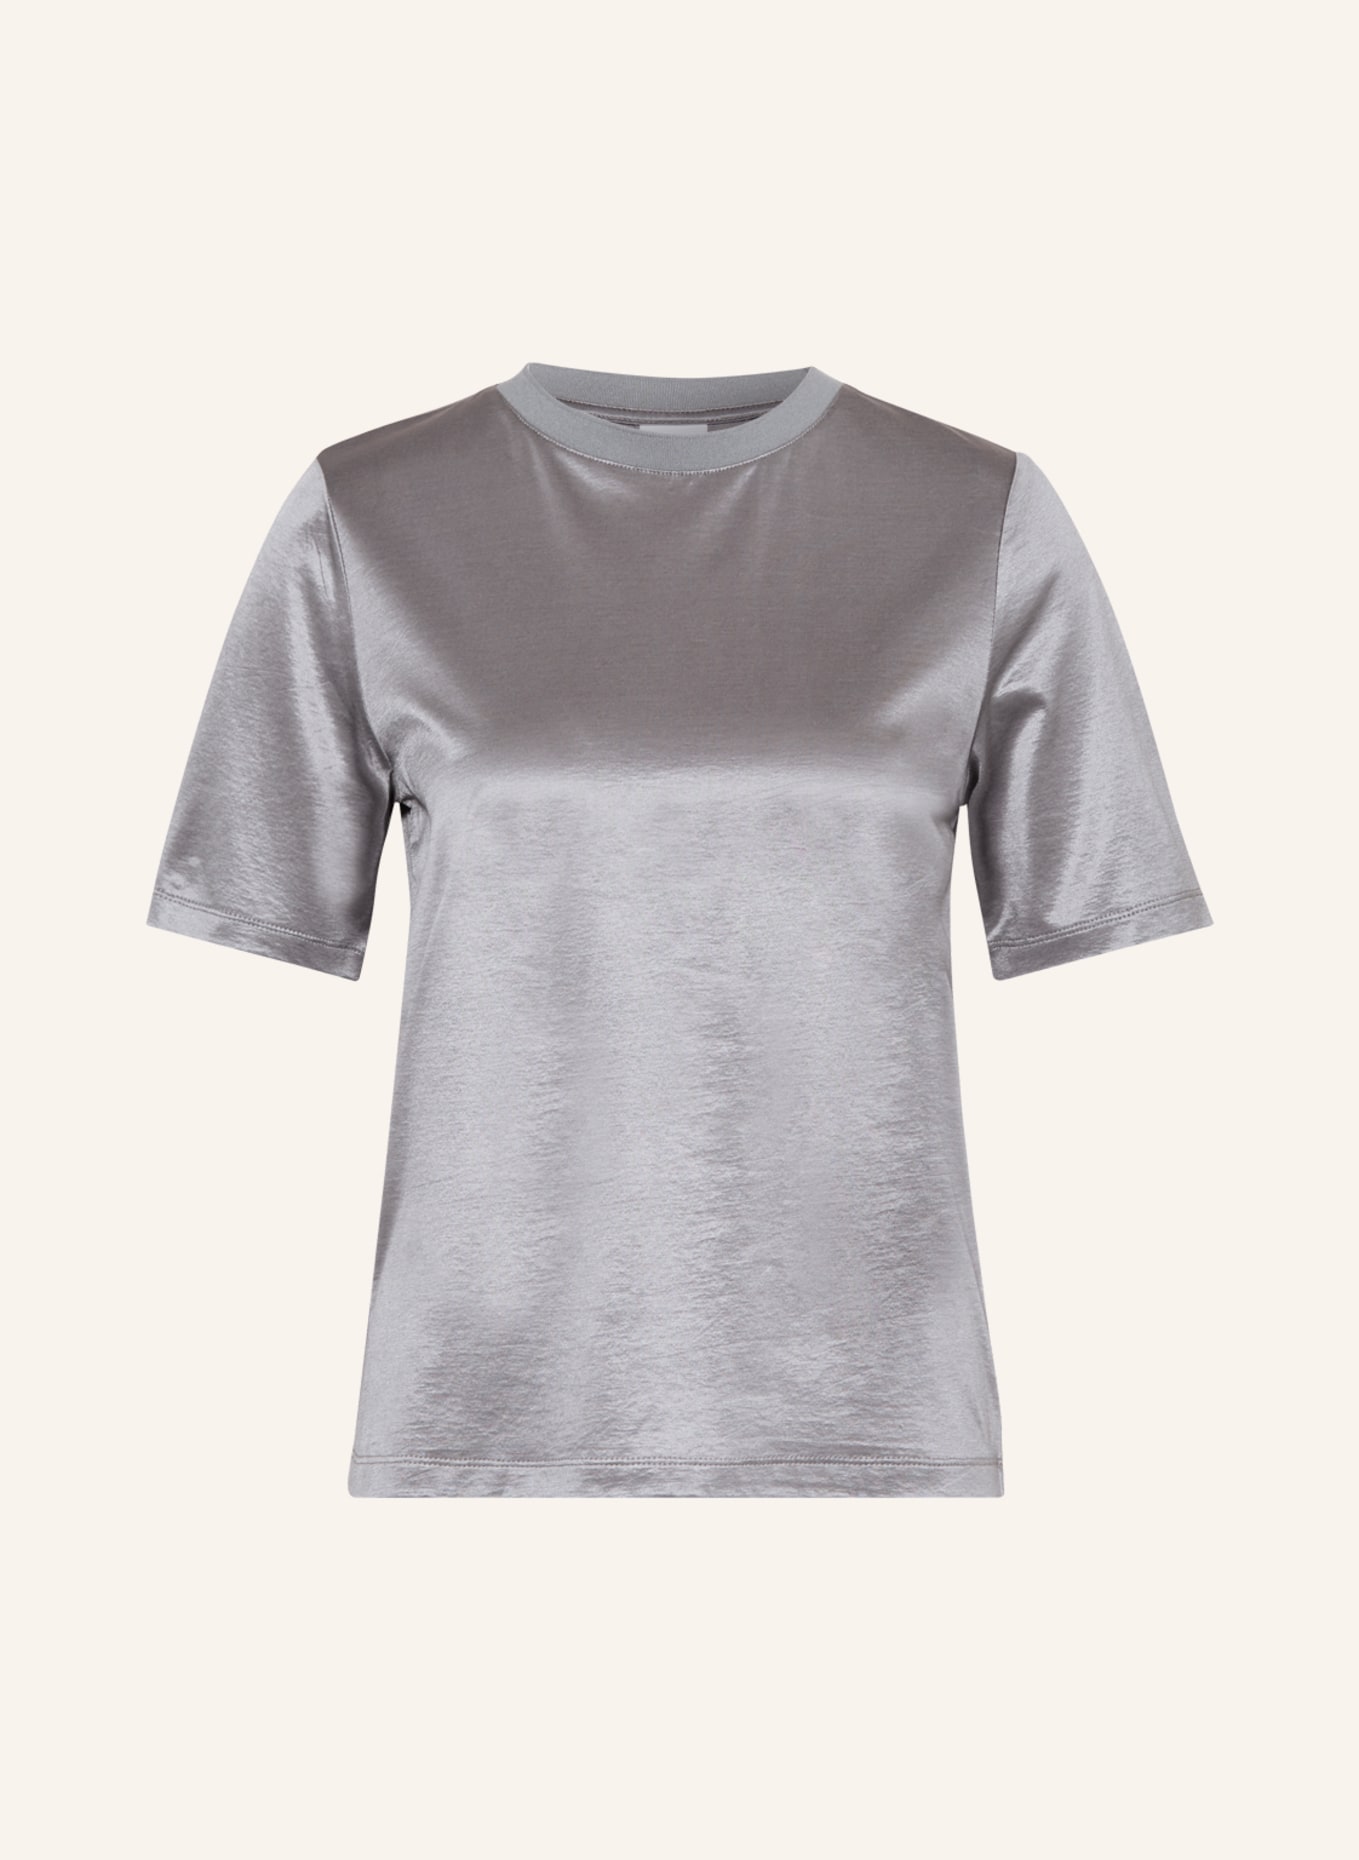 s.Oliver BLACK in gray Satin LABEL T-shirt